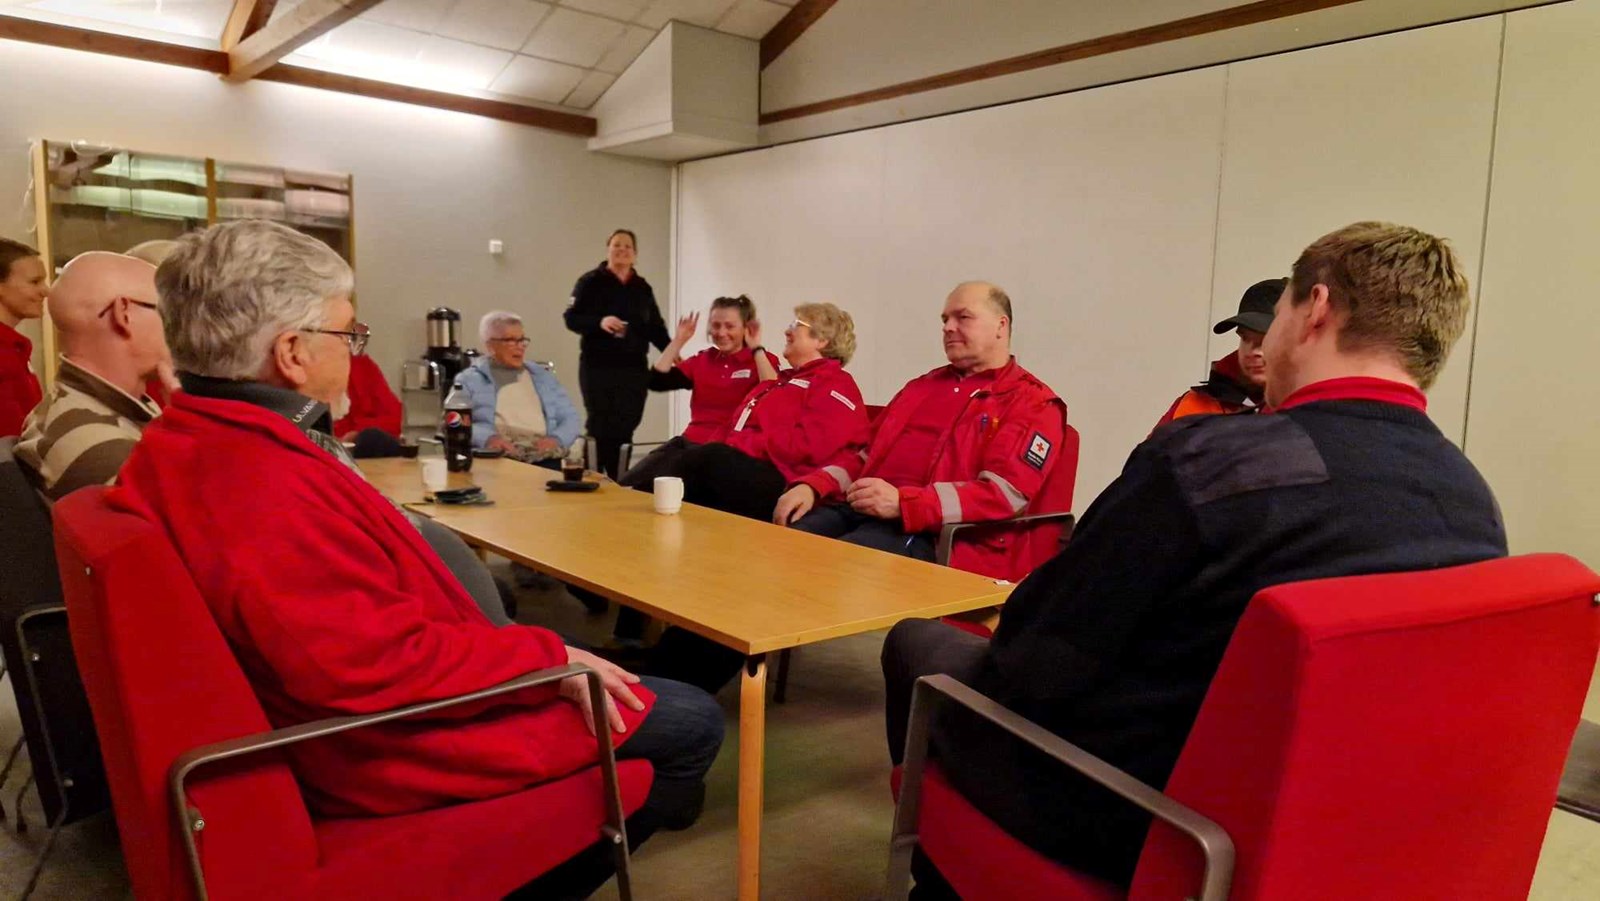 Røde Kors-kledde mennesker sitter rundt et bord og prater